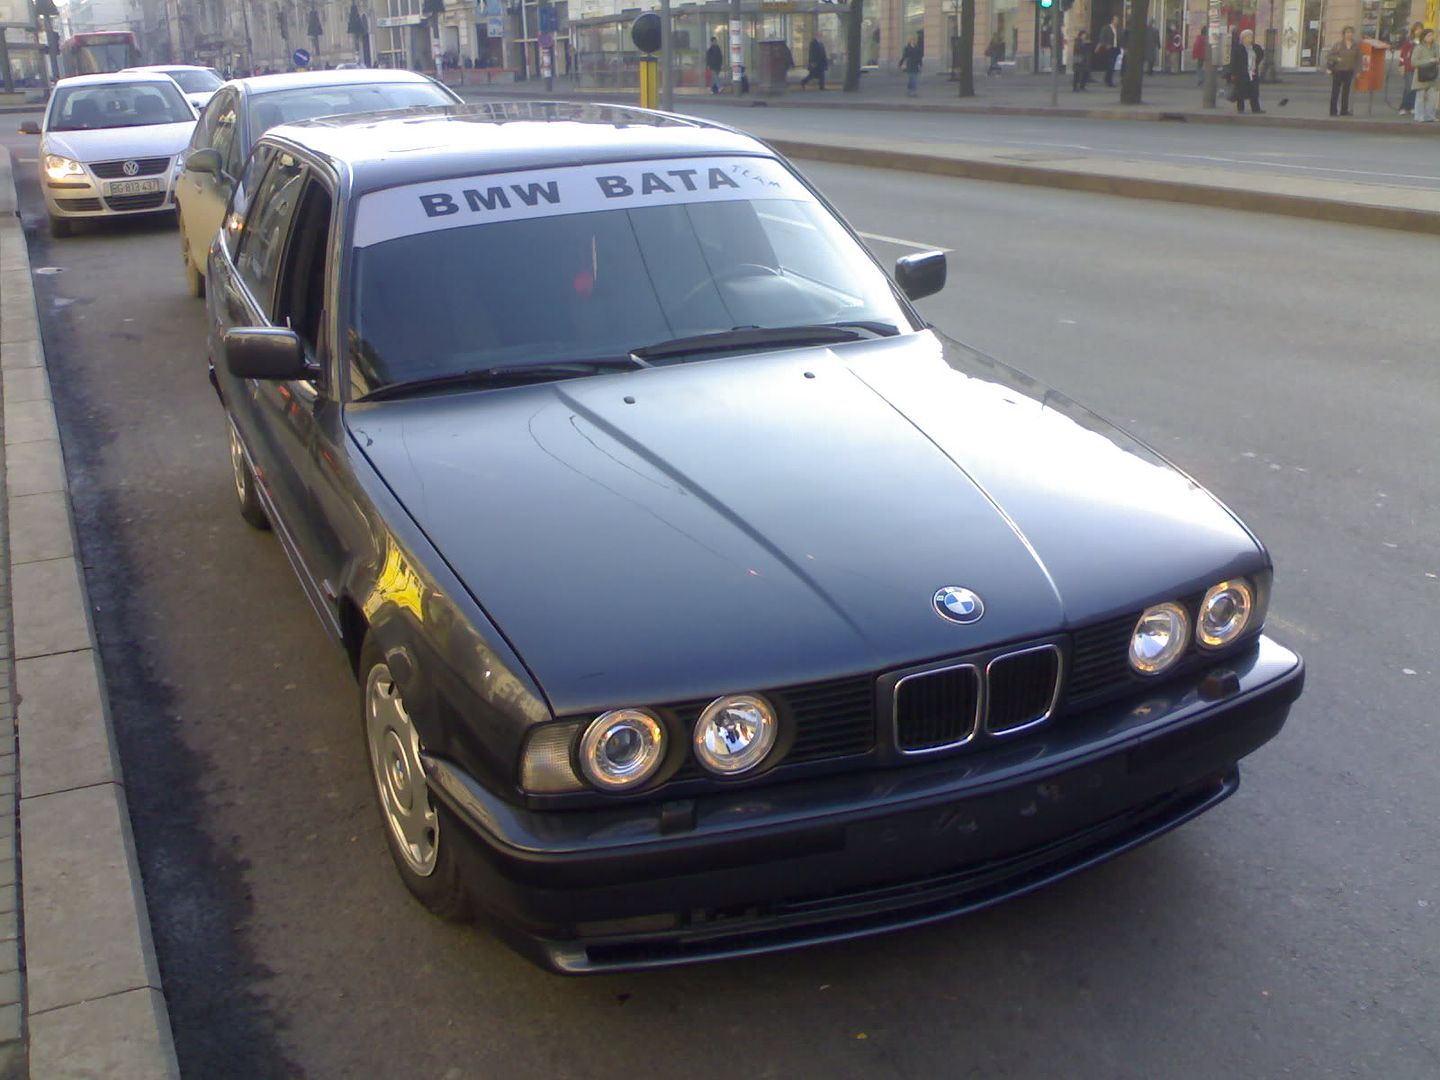 BMWBATA.jpg